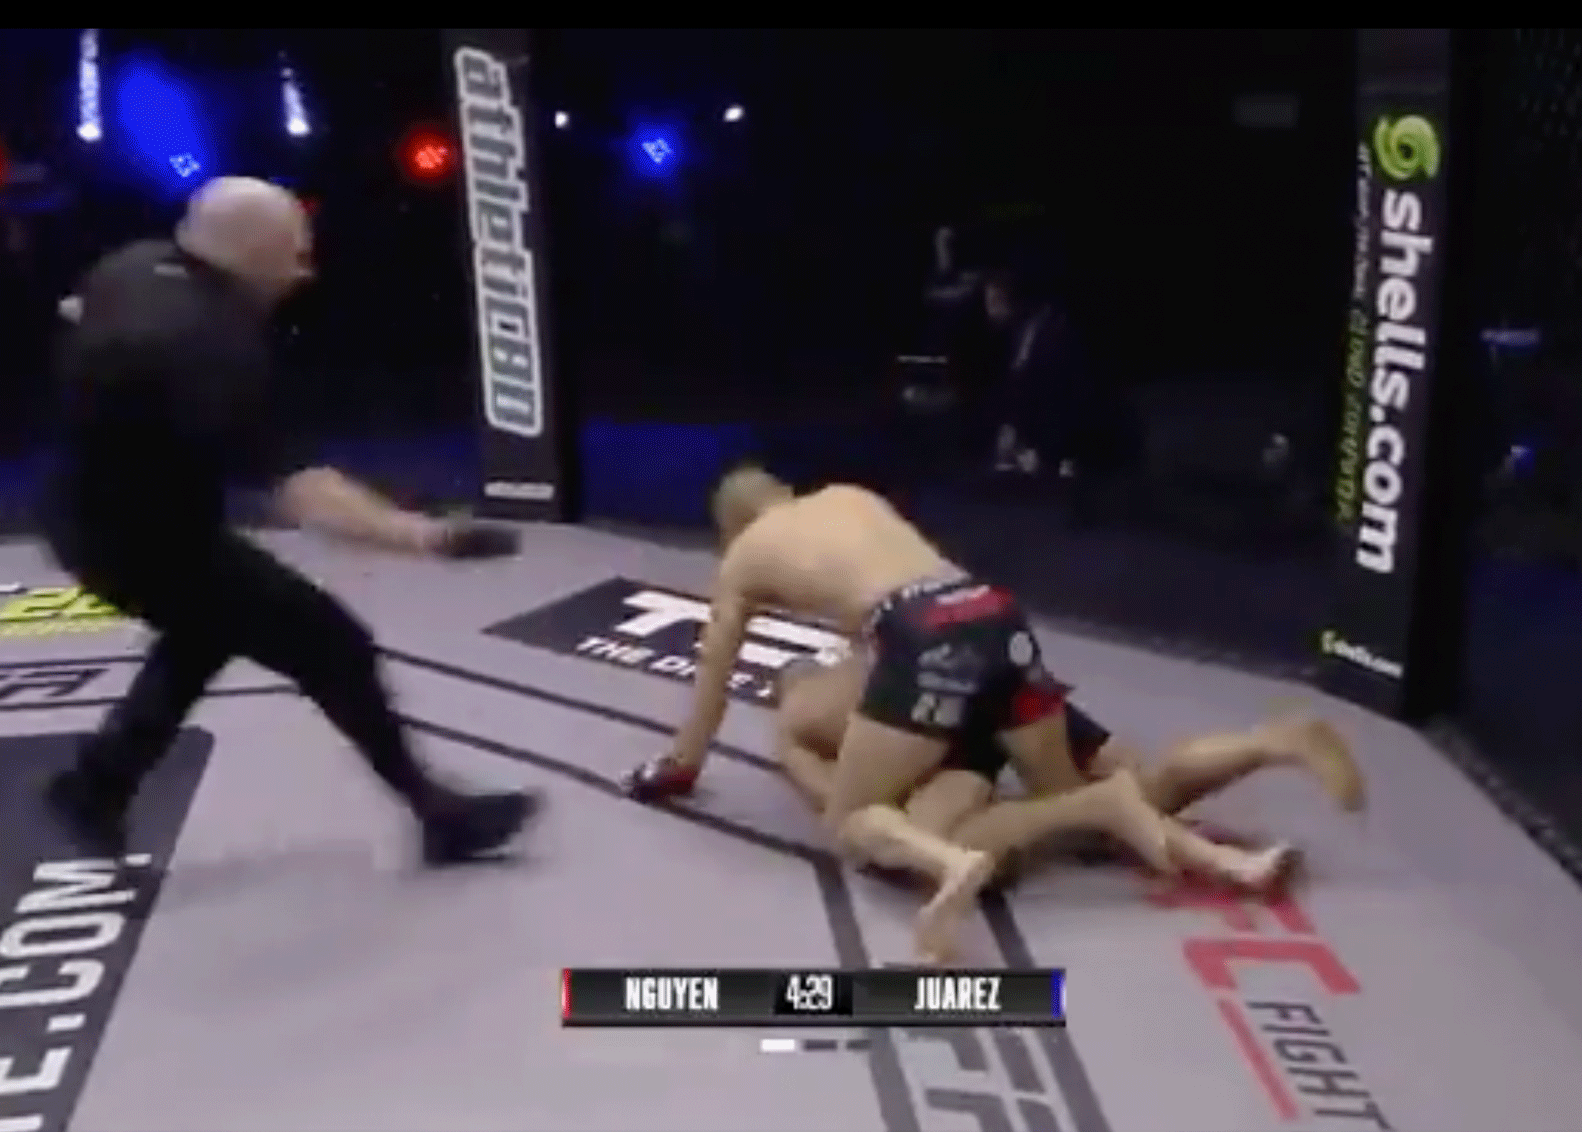 ‘Absoluut walgelijk’: MMA-vechter zwaar onder vuur na knock-out (video)